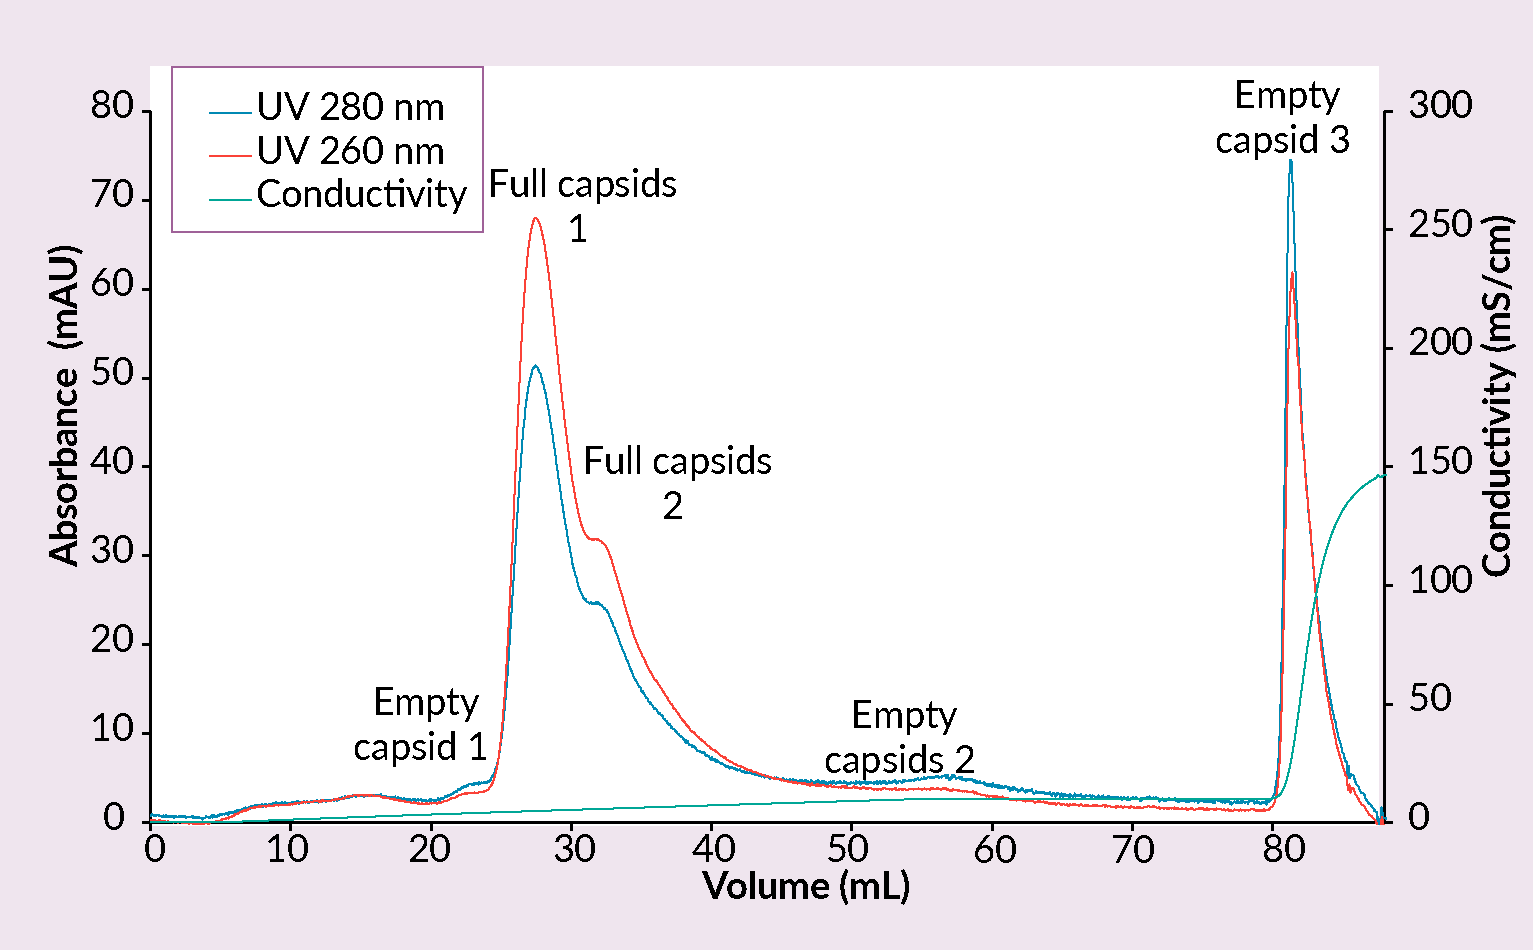 Conditions: sample AAV2/8 (SO3 eluate), mobile phase A1: 25 mM HEPES, 1% sucrose, 0.1% poloxamer pH 7.0, mobile phase A2: 50 mM Tris, 13.6 mM borate, 1% sucrose, 0.1% poloxamer pH 9.0, mobile phase B1: 50 mM Tris, 9.6 mM borate, 50 mM MgCl2, 1% sucrose, 0.1% poloxamer pH 9.0, mobile phase B2: 50 mM Tris, 12 mM borate, 2 M NaCl, 1% sucrose, 0.1% poloxamer pH 9.0, column CIMmultus PrimaT 1mL, method A2 to 100% B1 in 50CV, then step to 100% B2 for 10CVs, 5CV CIP (1M NaOH, 2M NaCl).